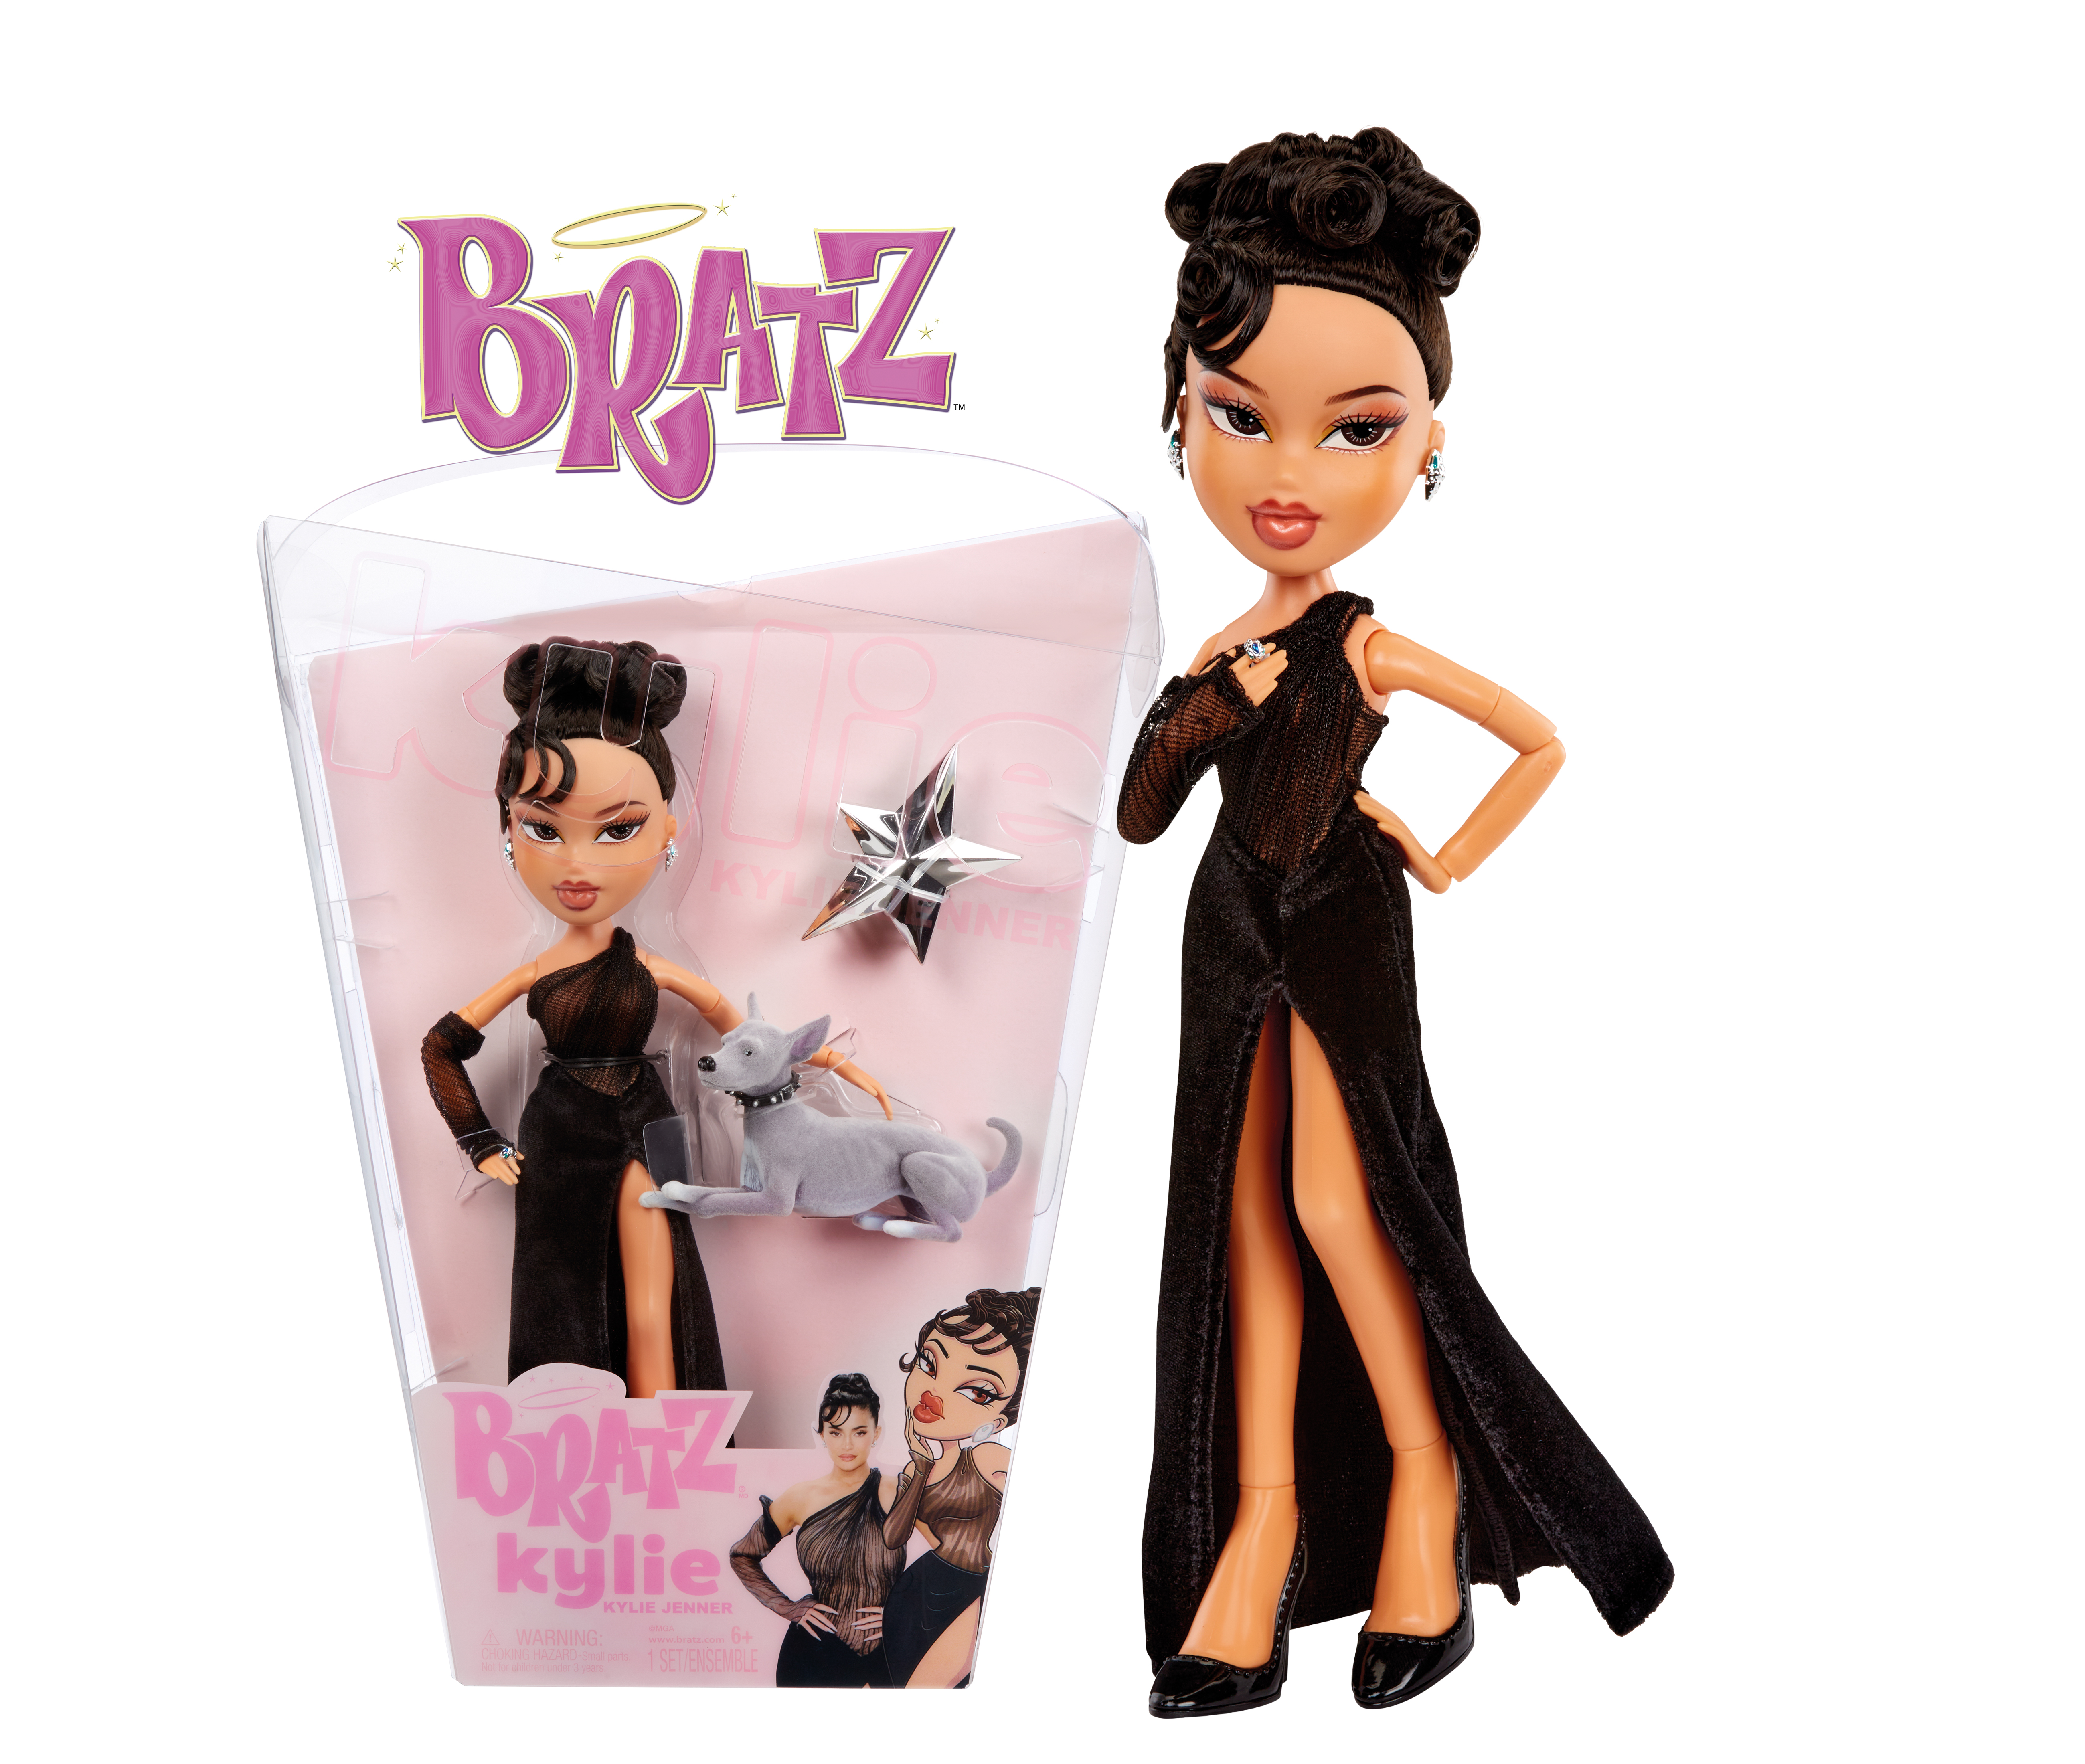 Bratz - poupee - celebrity doll day, poupees